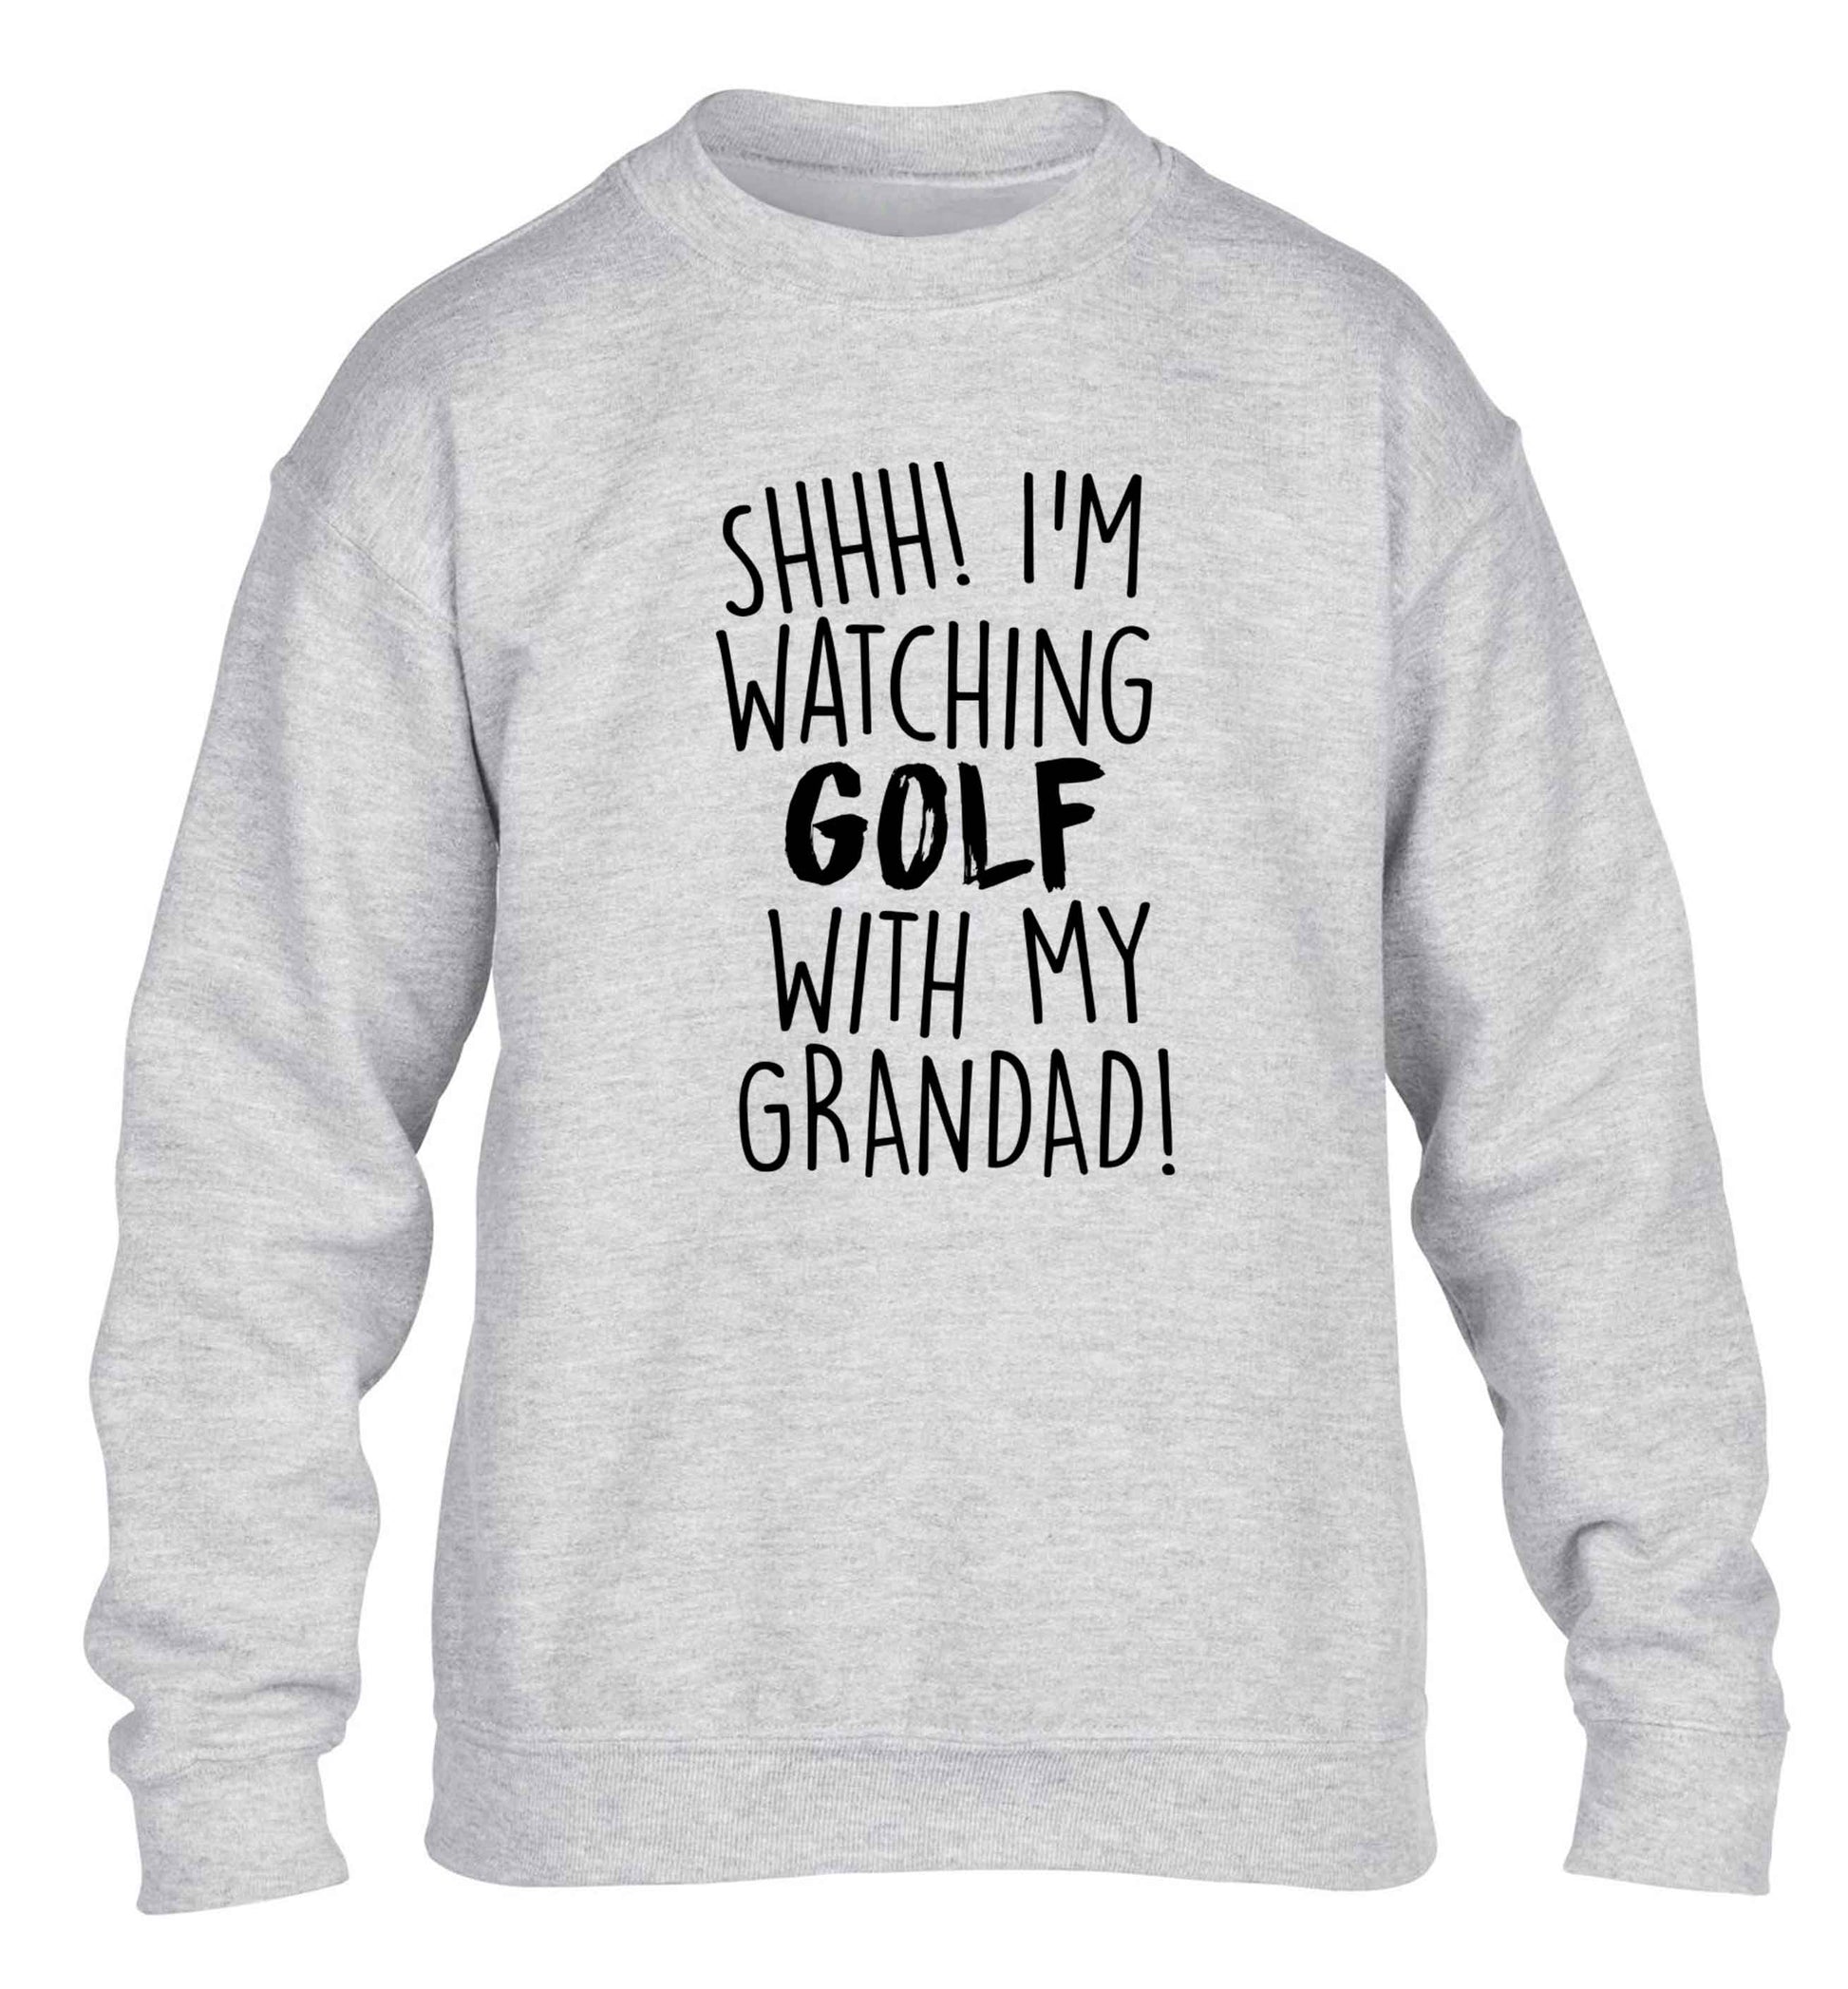 Shh I'm watching golf with my grandad children's grey sweater 12-13 Years